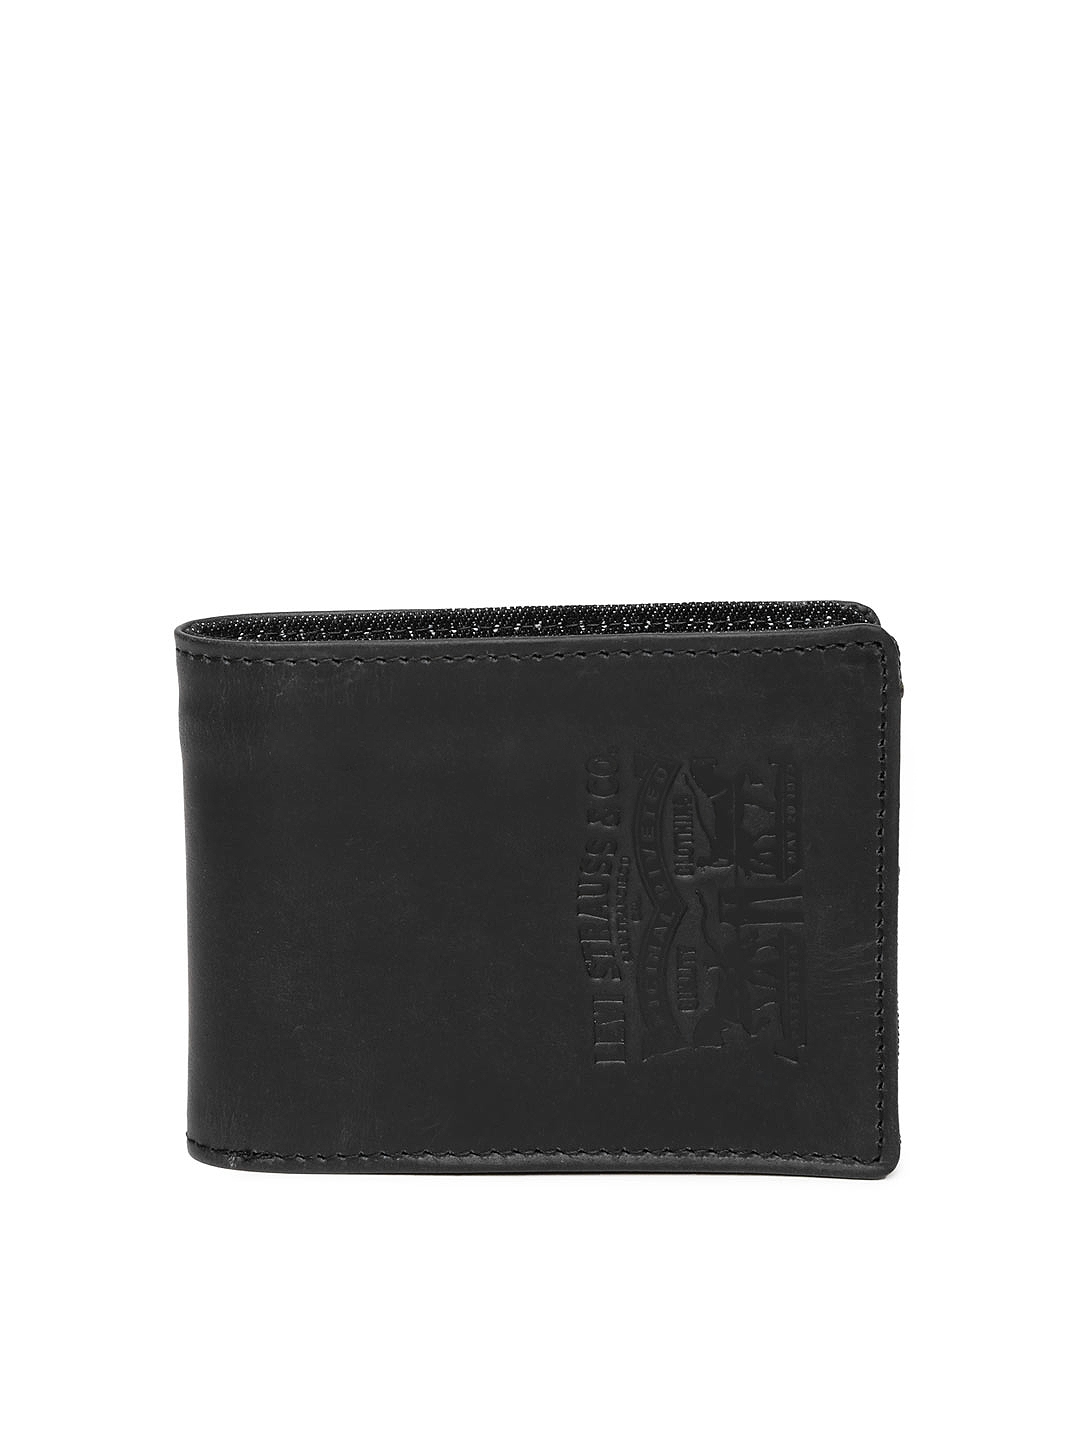 Buy Levi's Men Black Leather Wallet - Wallets for Men 1381915 | Myntra